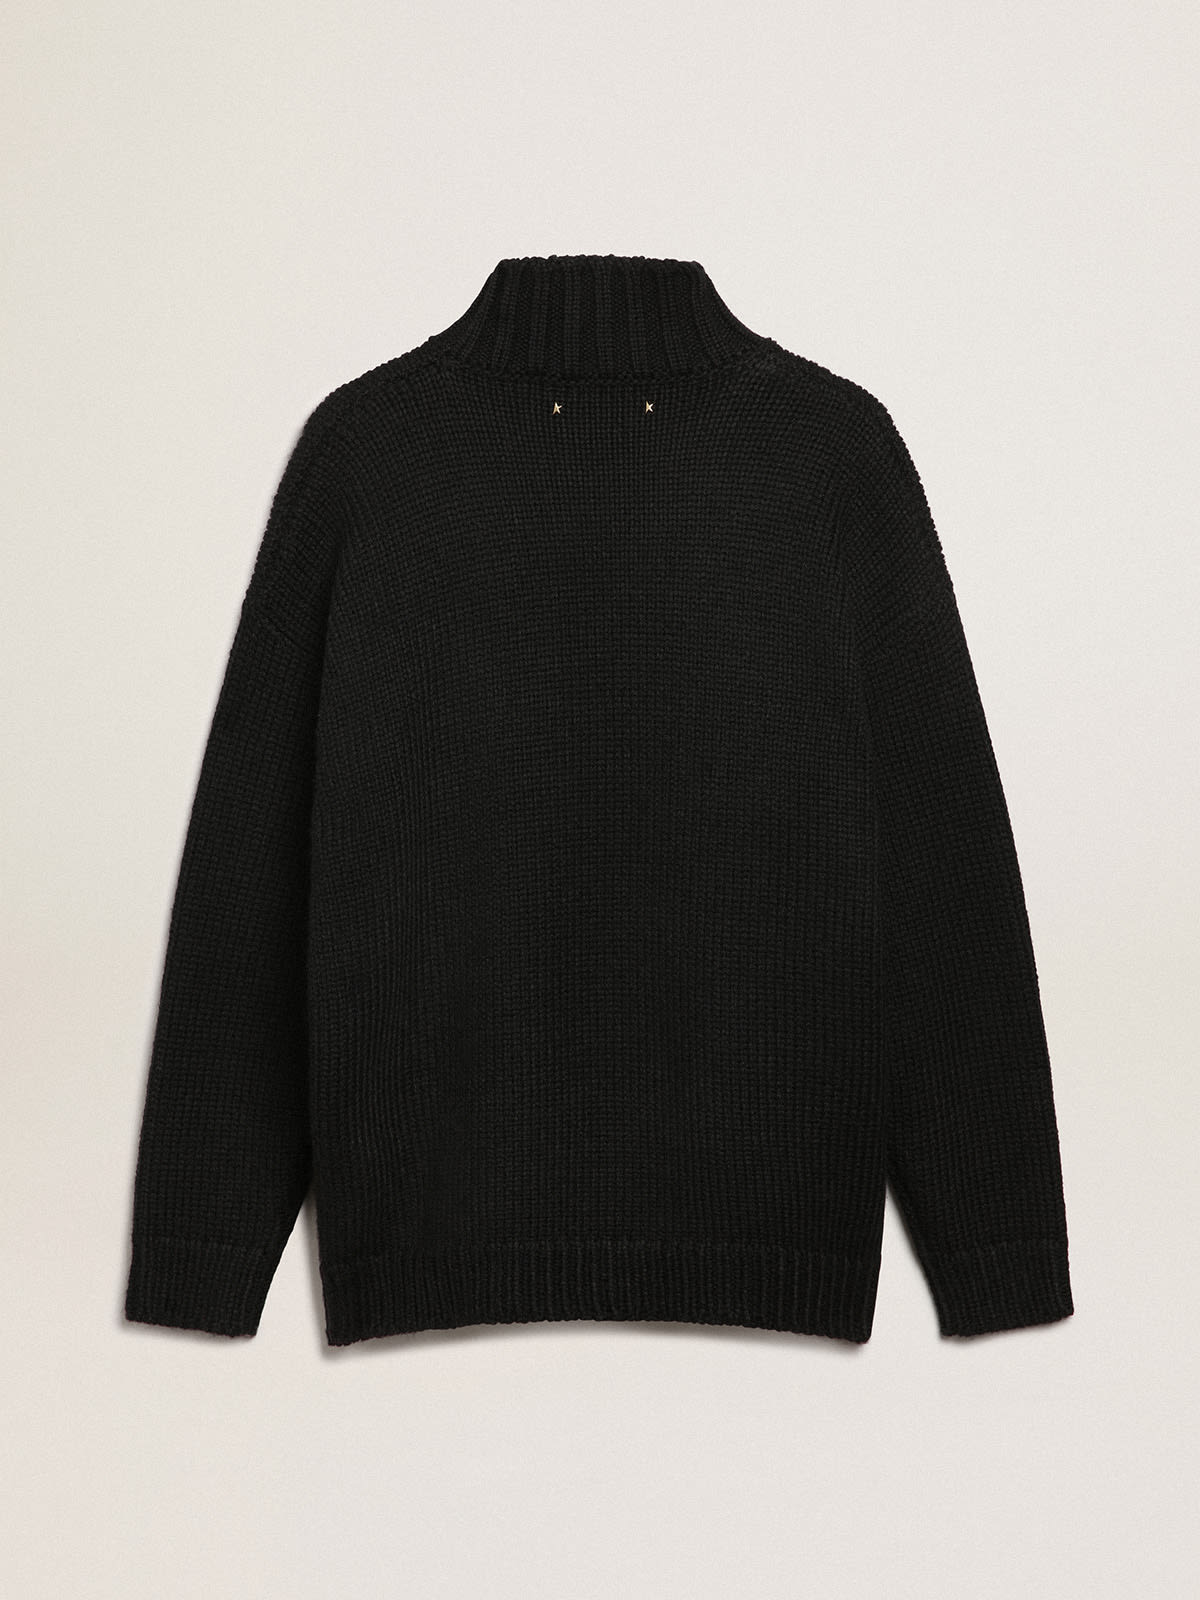 Women's high-neck sweater in black wool blend | Golden Goose